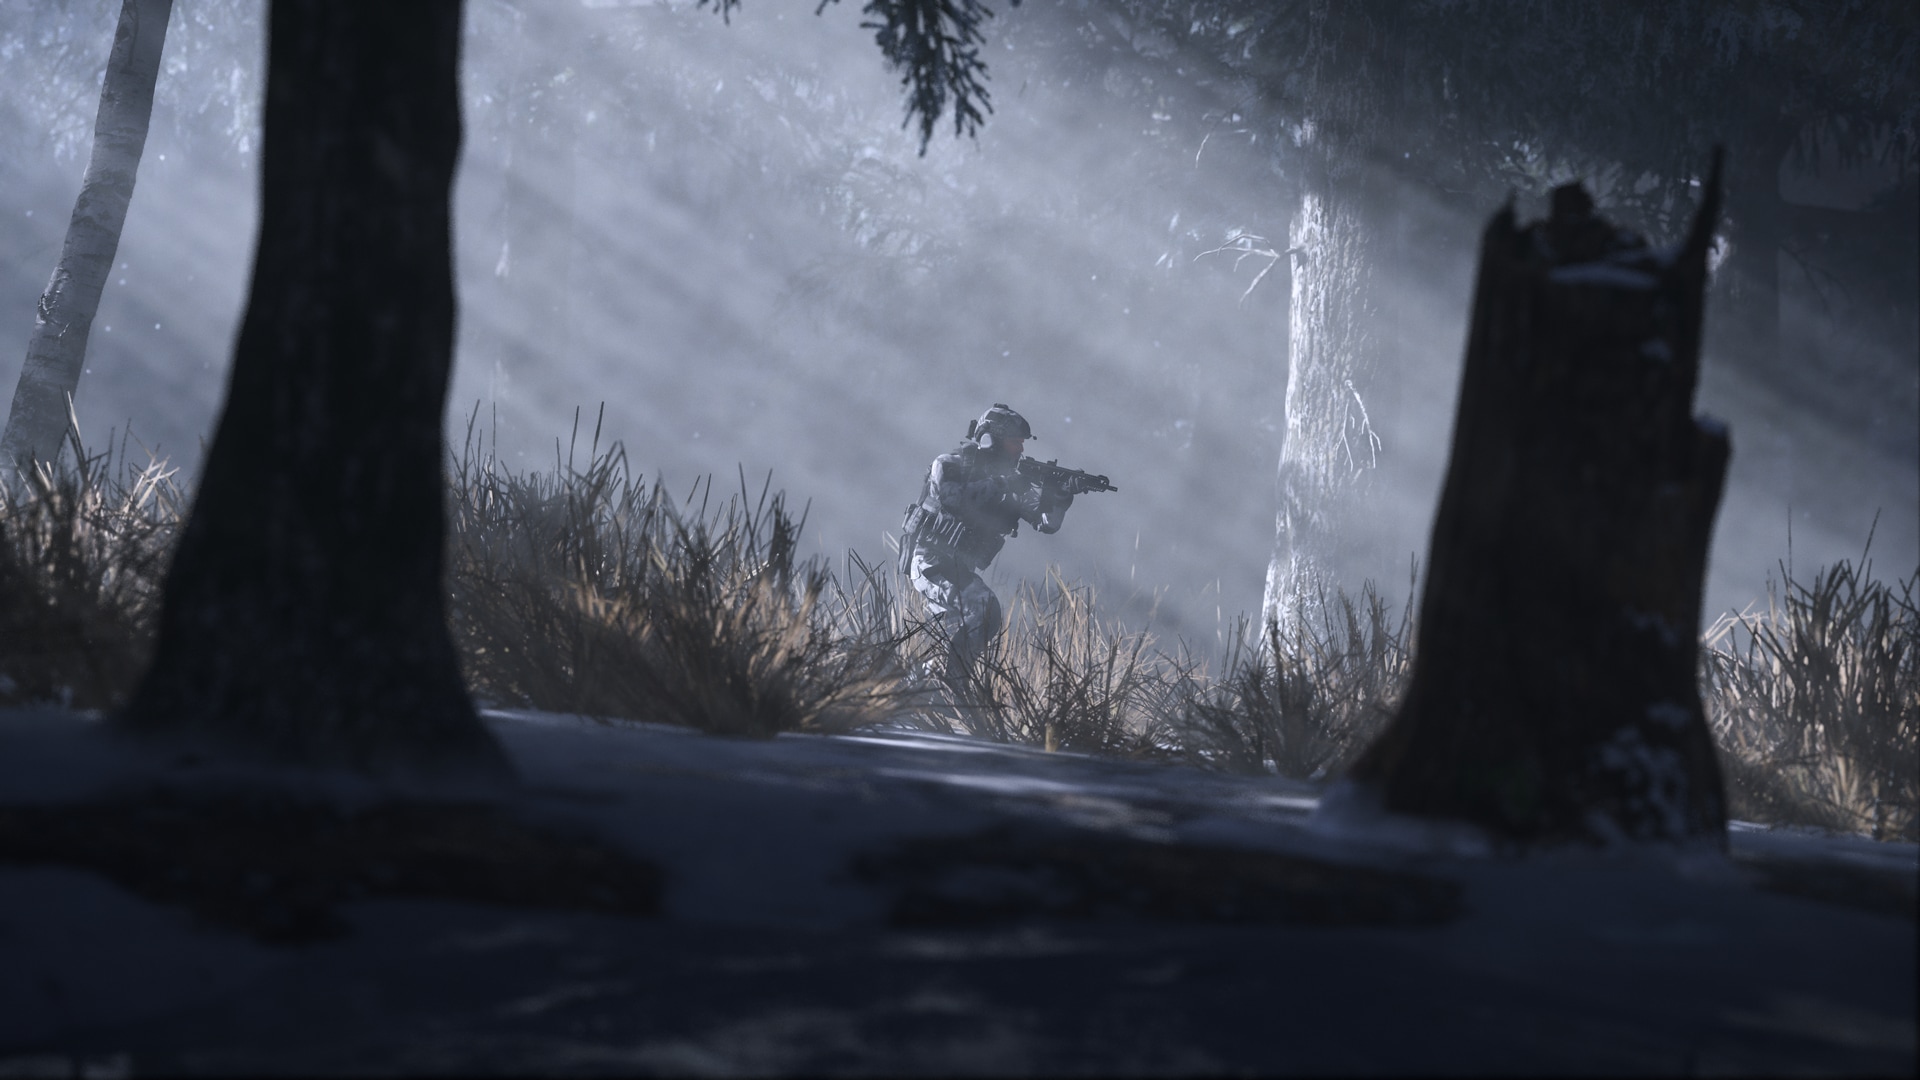 Call of Duty – Modern Warfare 3 (heroes) Art